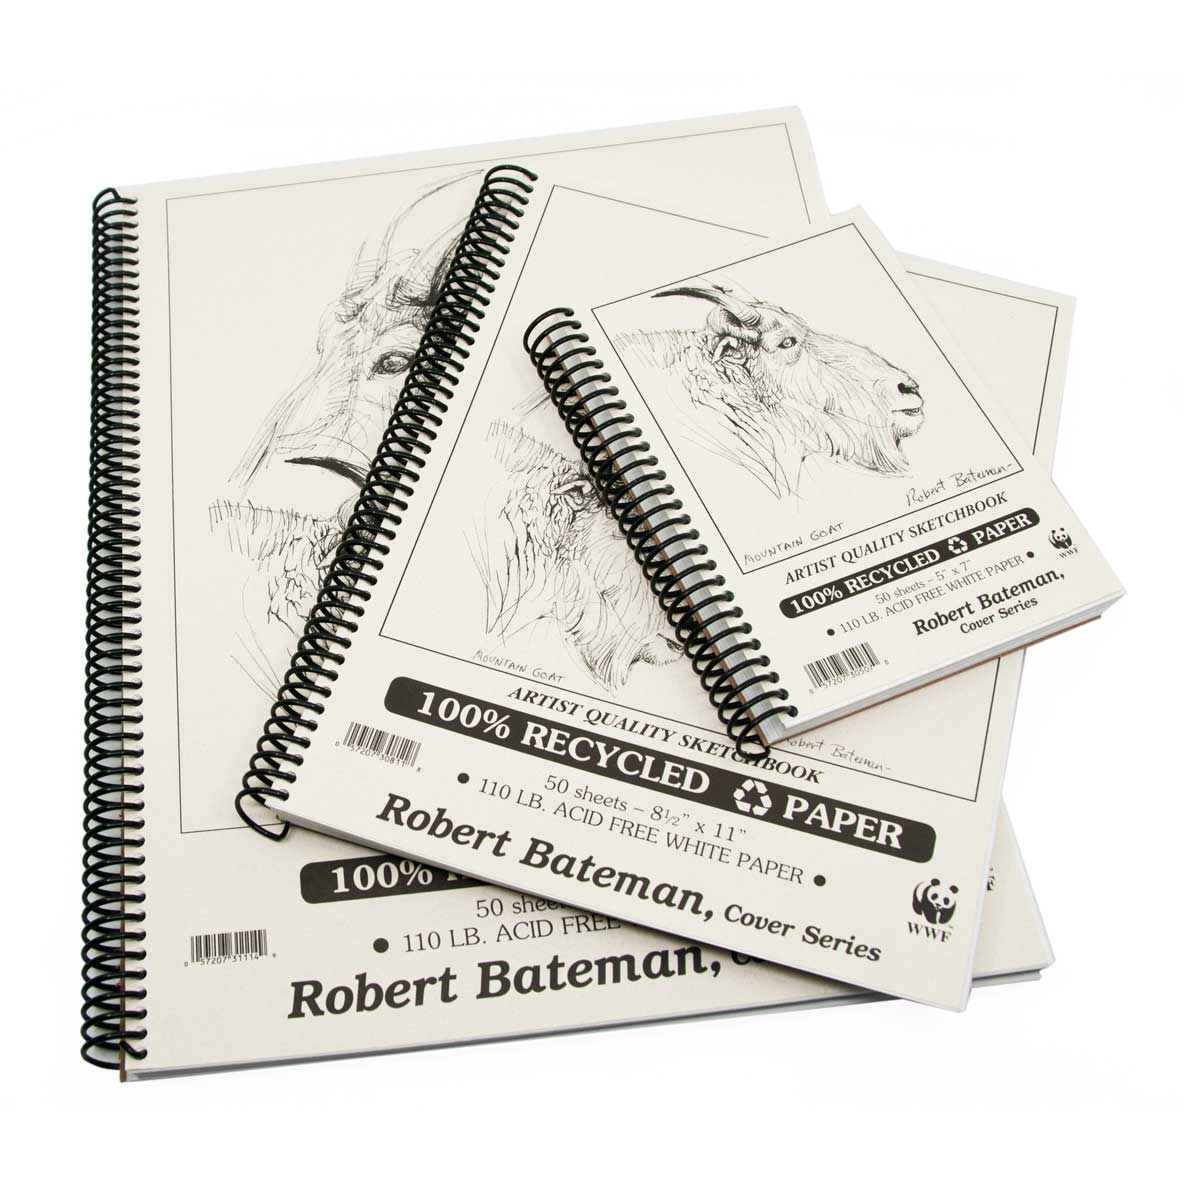 Robert Bateman Artist Quality Sketchbook 110LB/50 Sh, 8 x 11 inches